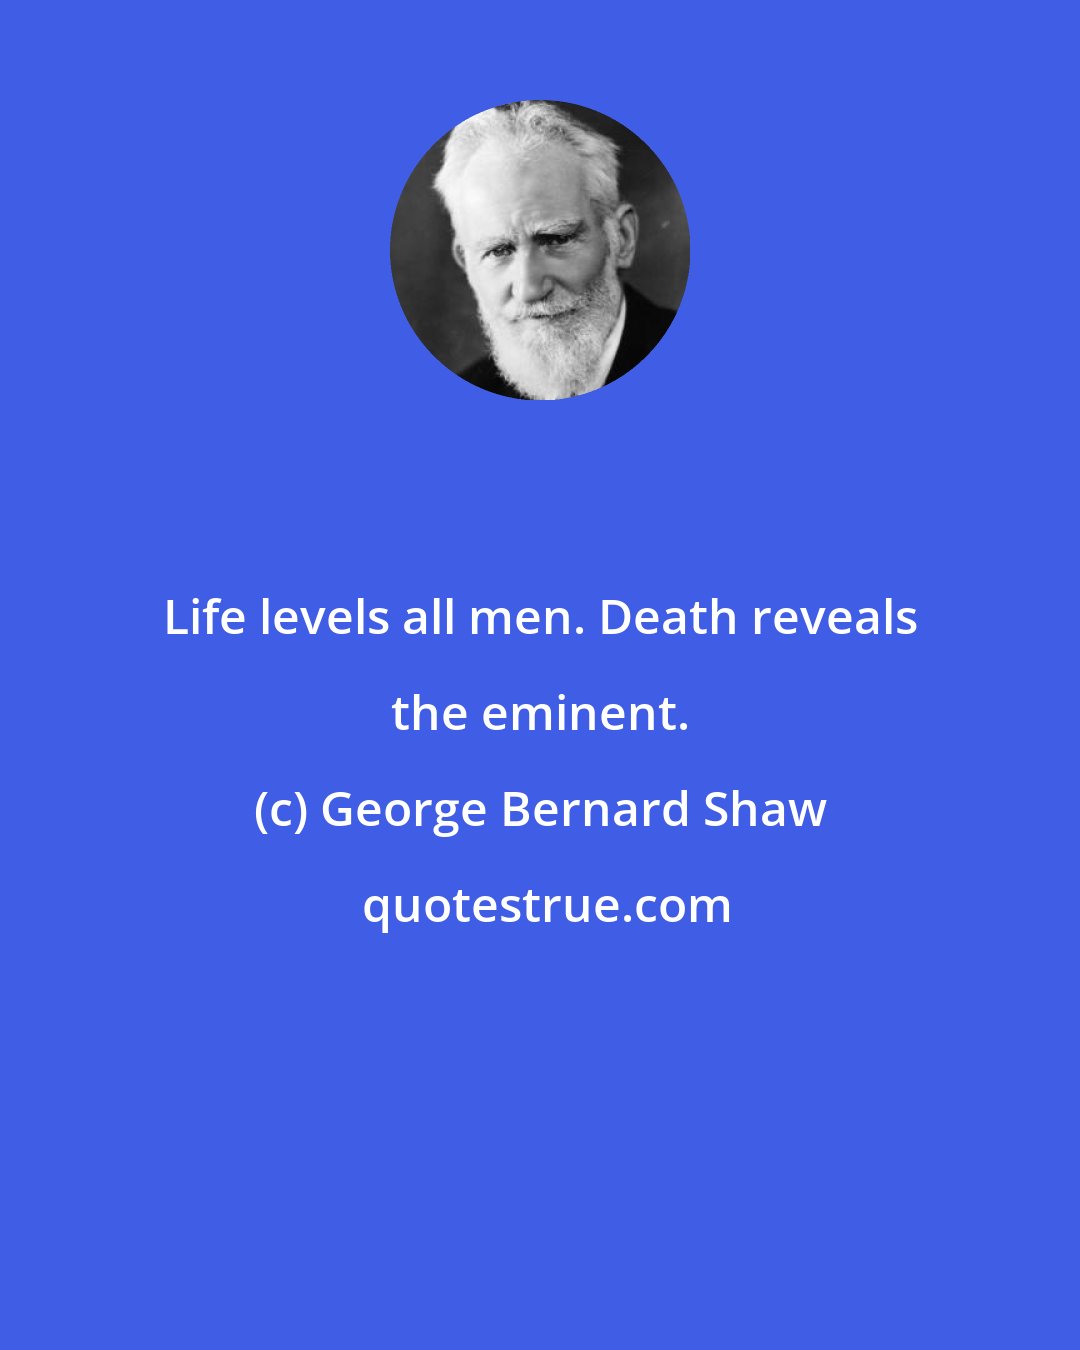 George Bernard Shaw: Life levels all men. Death reveals the eminent.